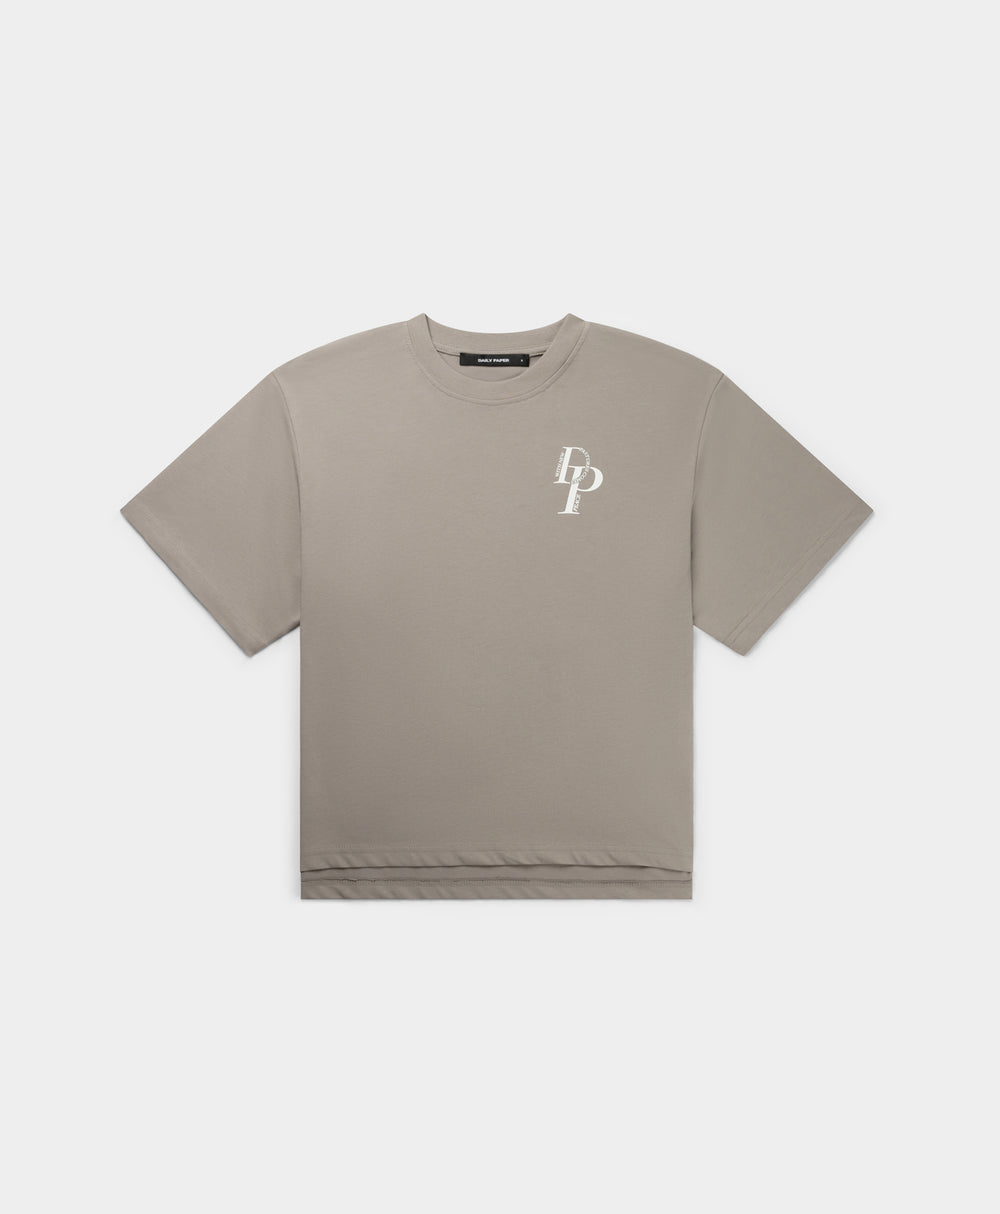 DP - Grey Flannel Rufaro T-Shirt - Packshot - Front